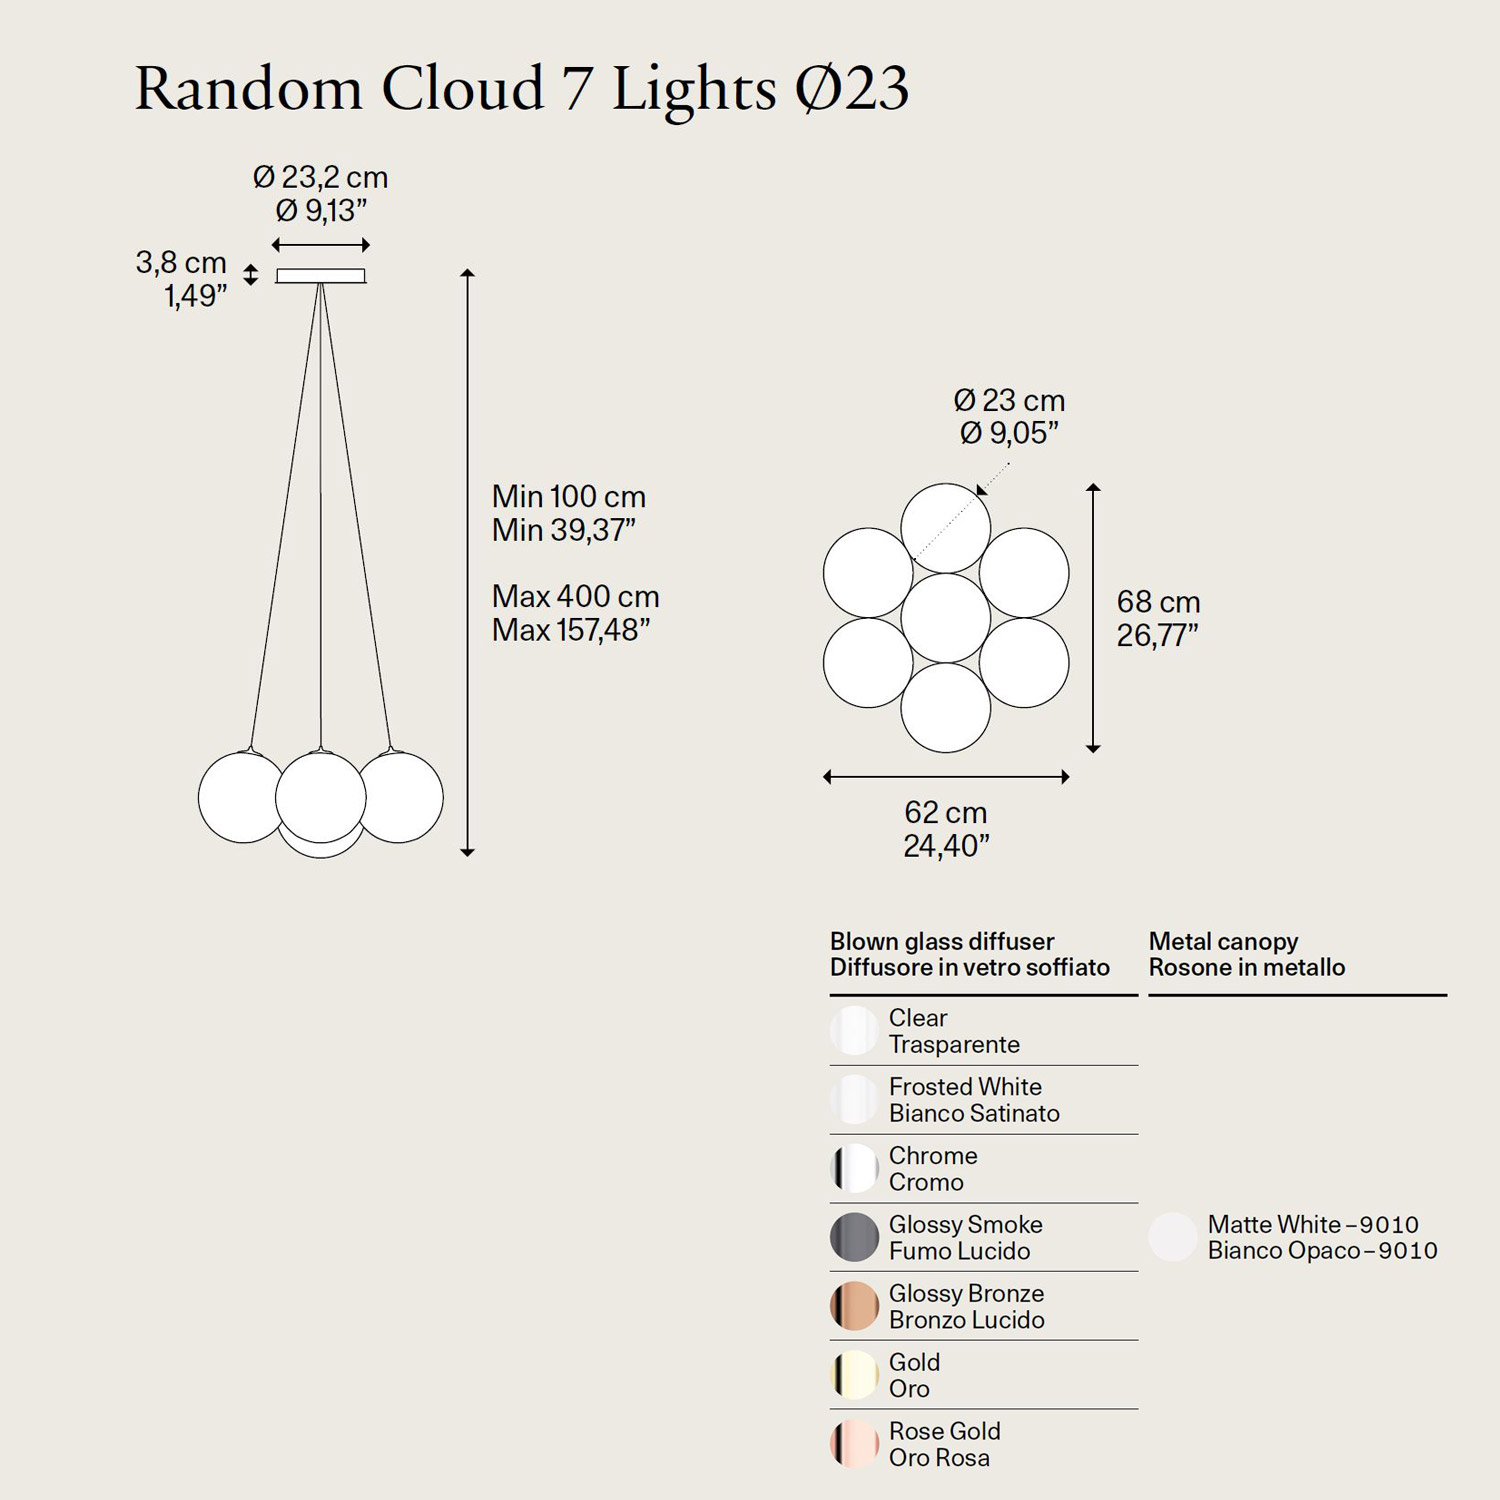 Random Cloud 7 Lights Ø23 by Lodes